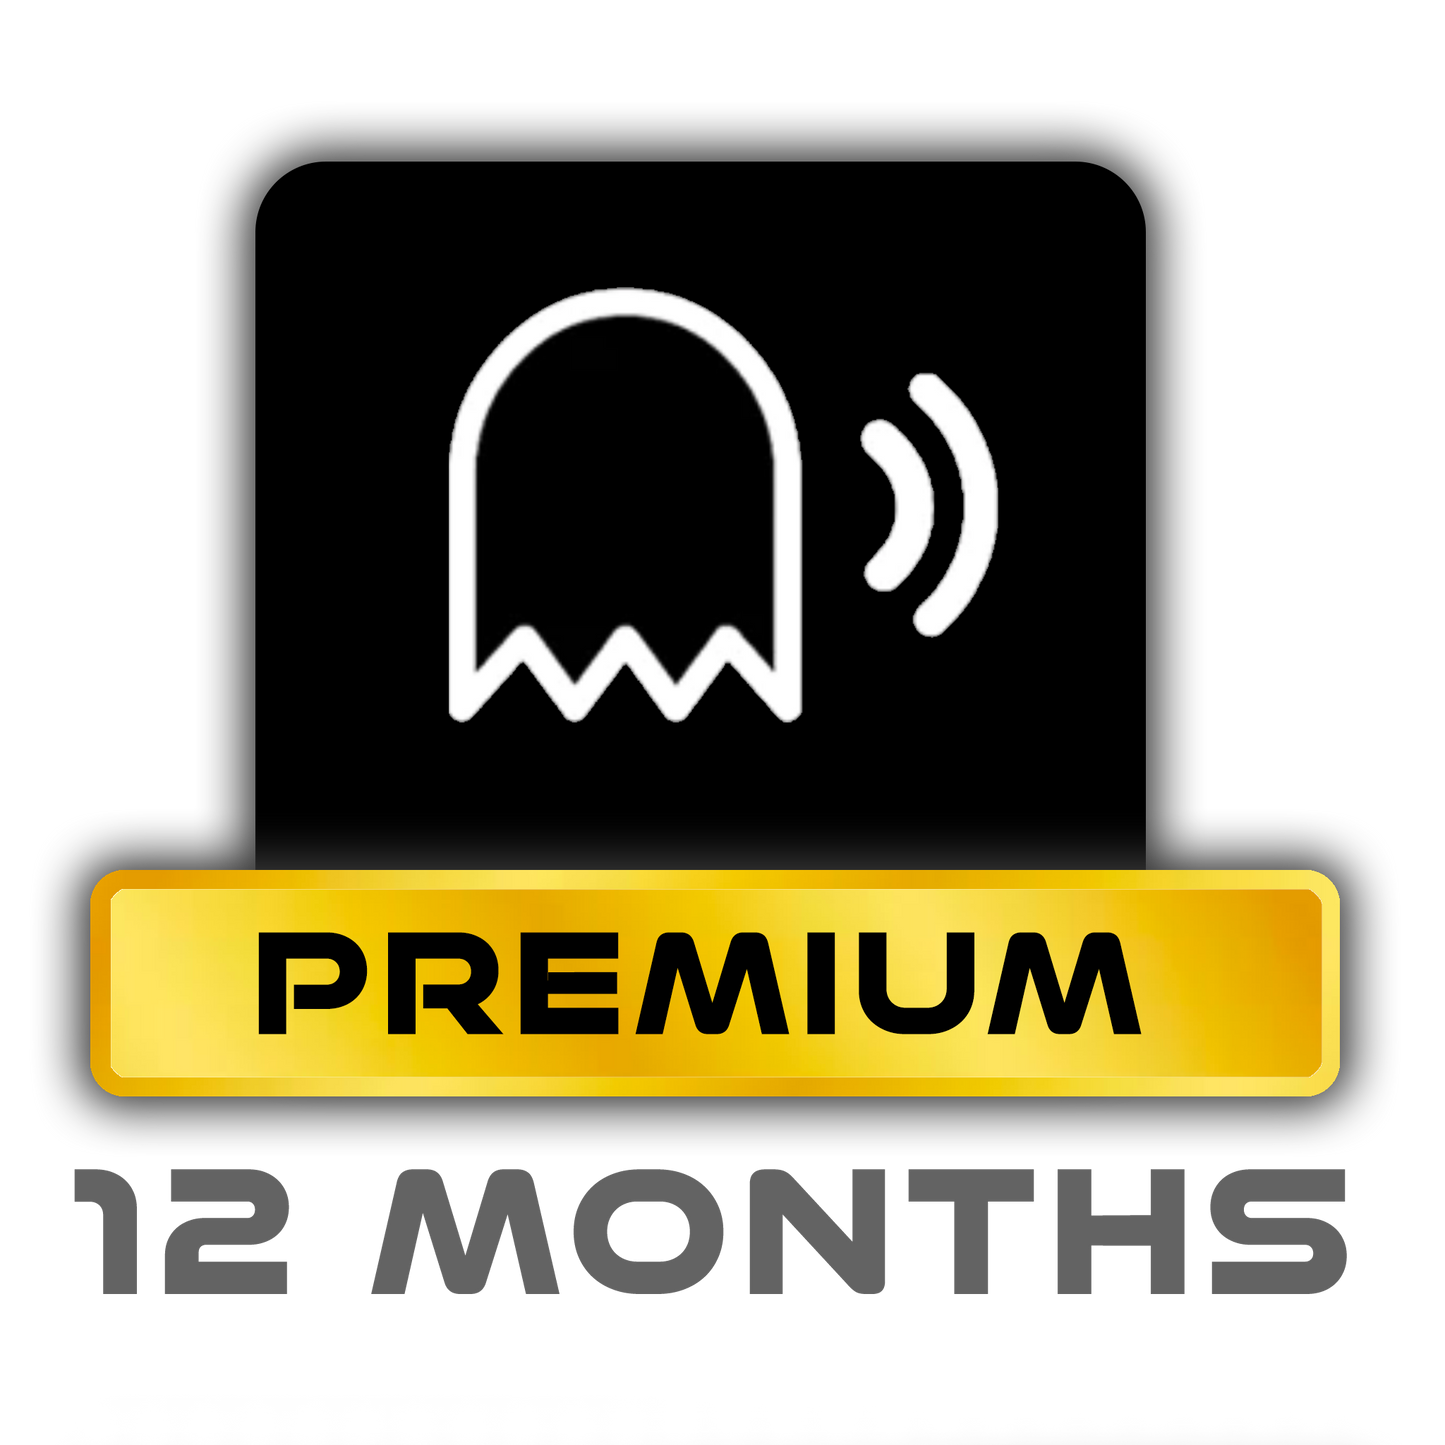 GhostTube Original 12 month subscription